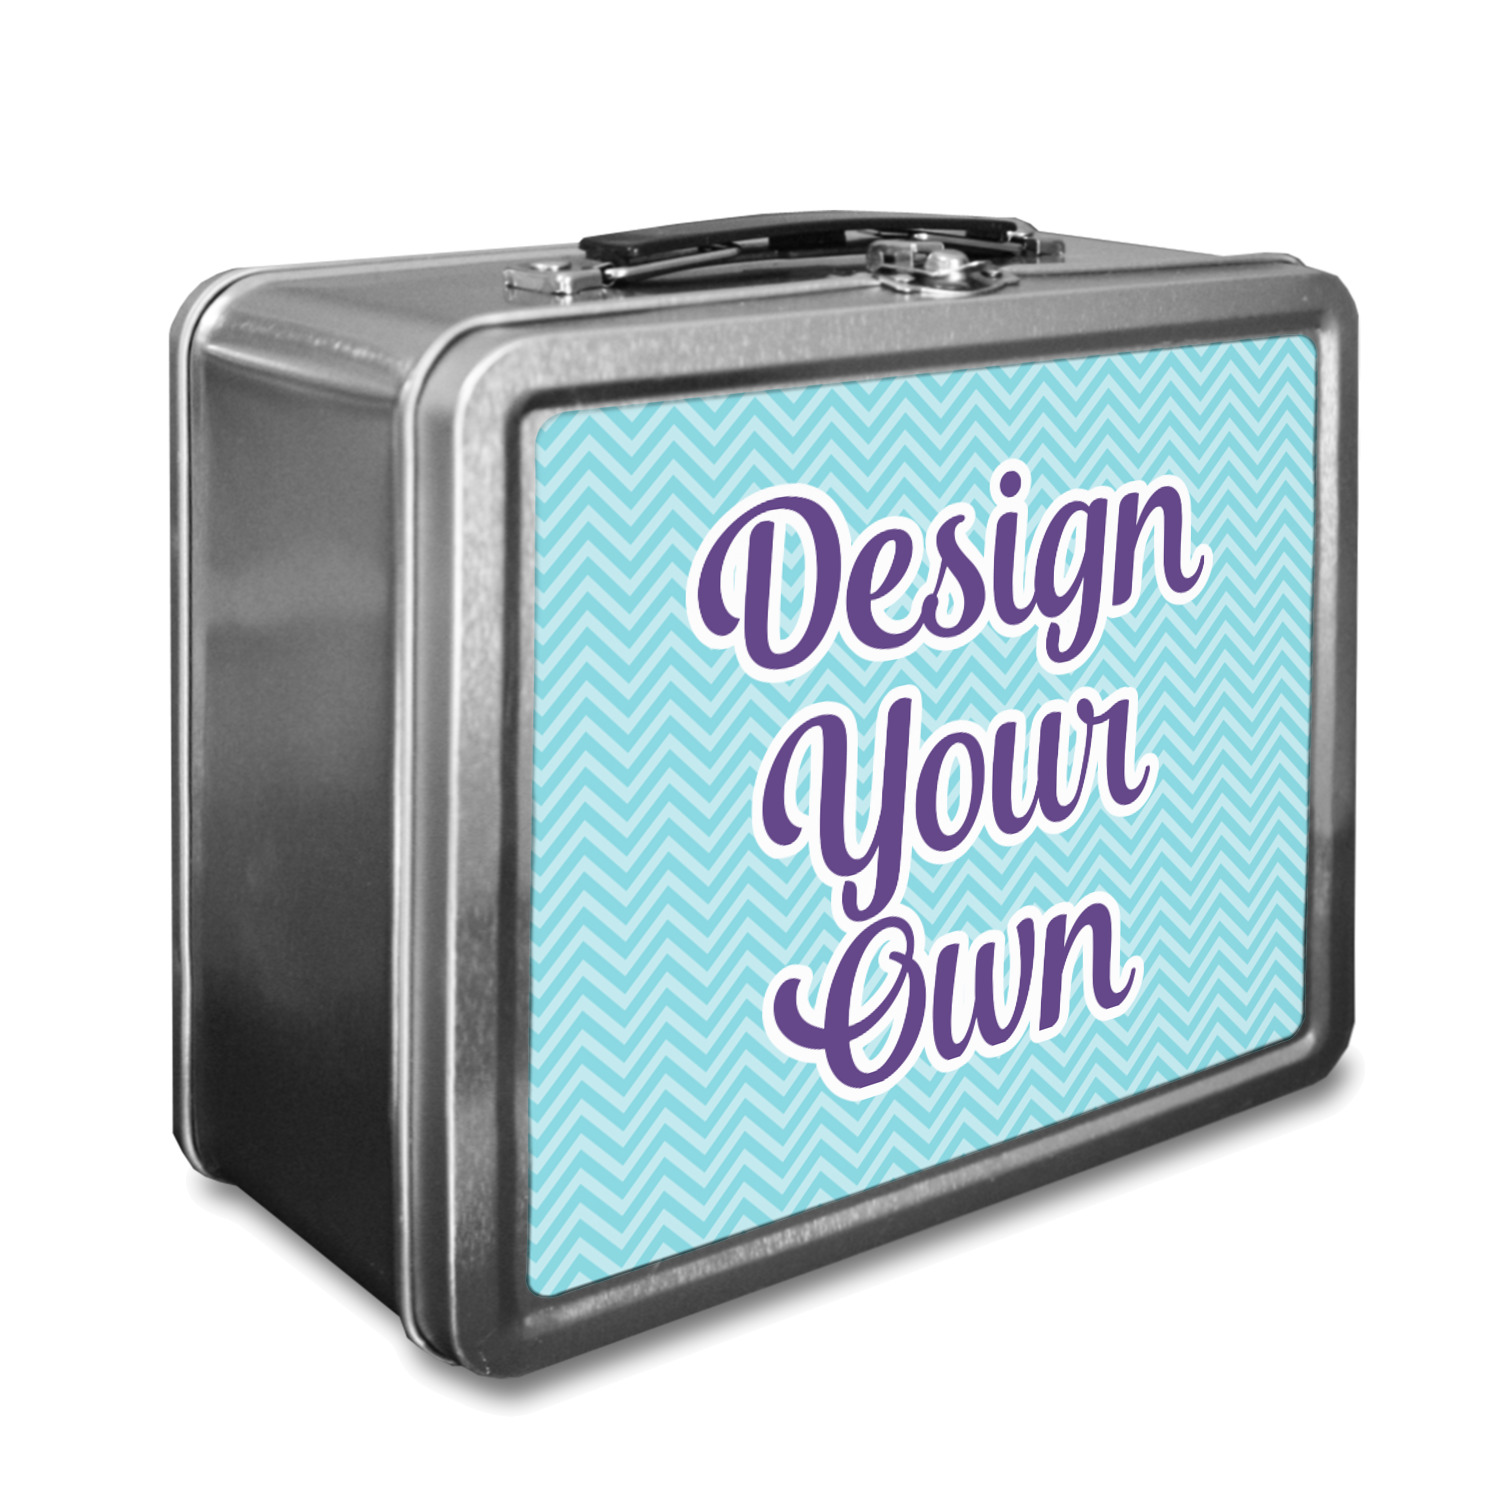 Tin Box Lunchbox, Dream Big